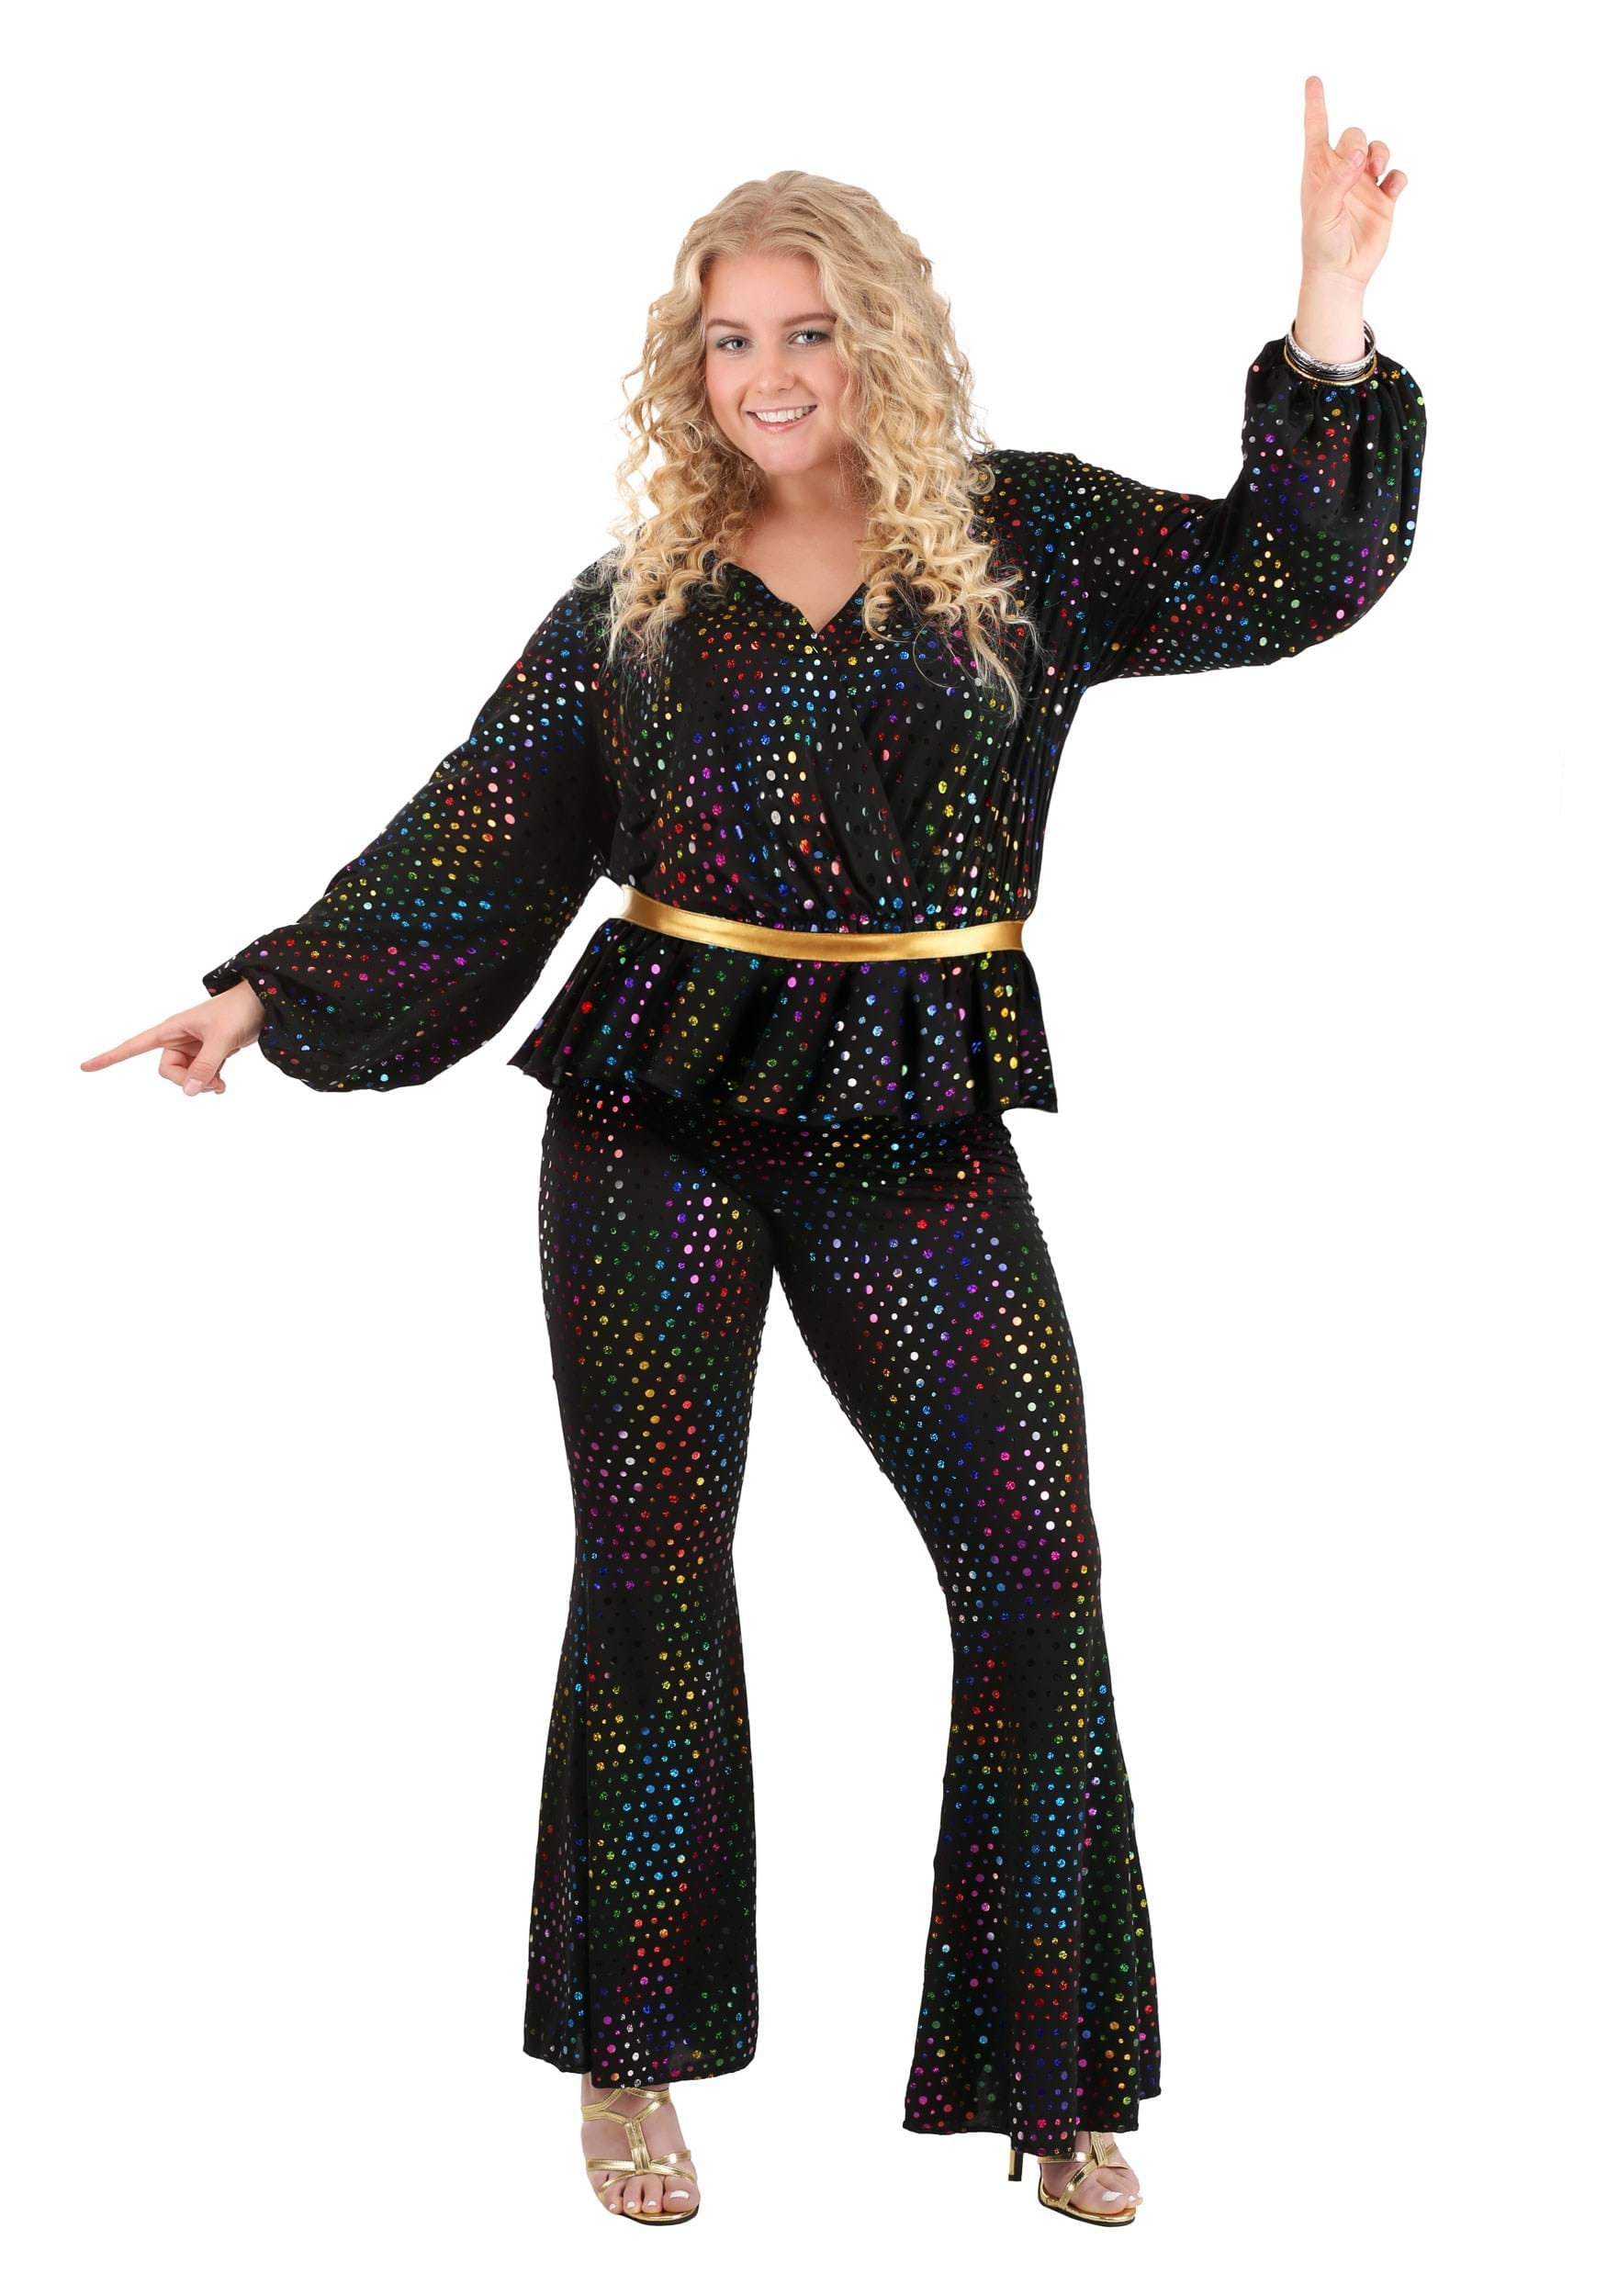 Drik vand lys pære Gå ned Women's Plus Size Disco Queen Costume - Walmart.com